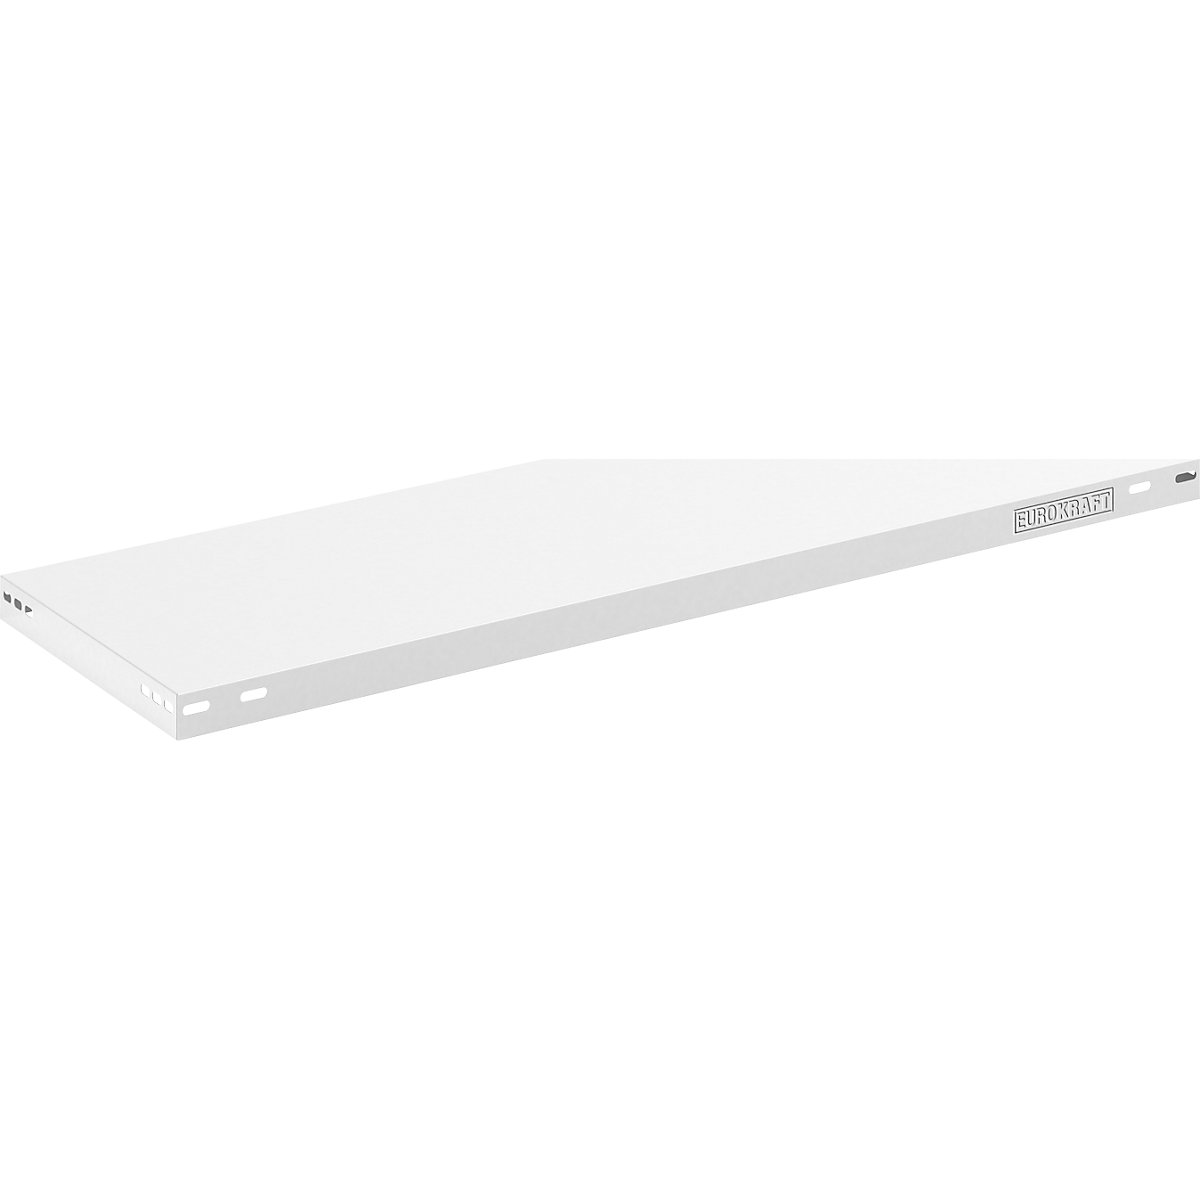 Shelf – eurokraft pro, plastic-coated, WxD 1000 x 400 mm